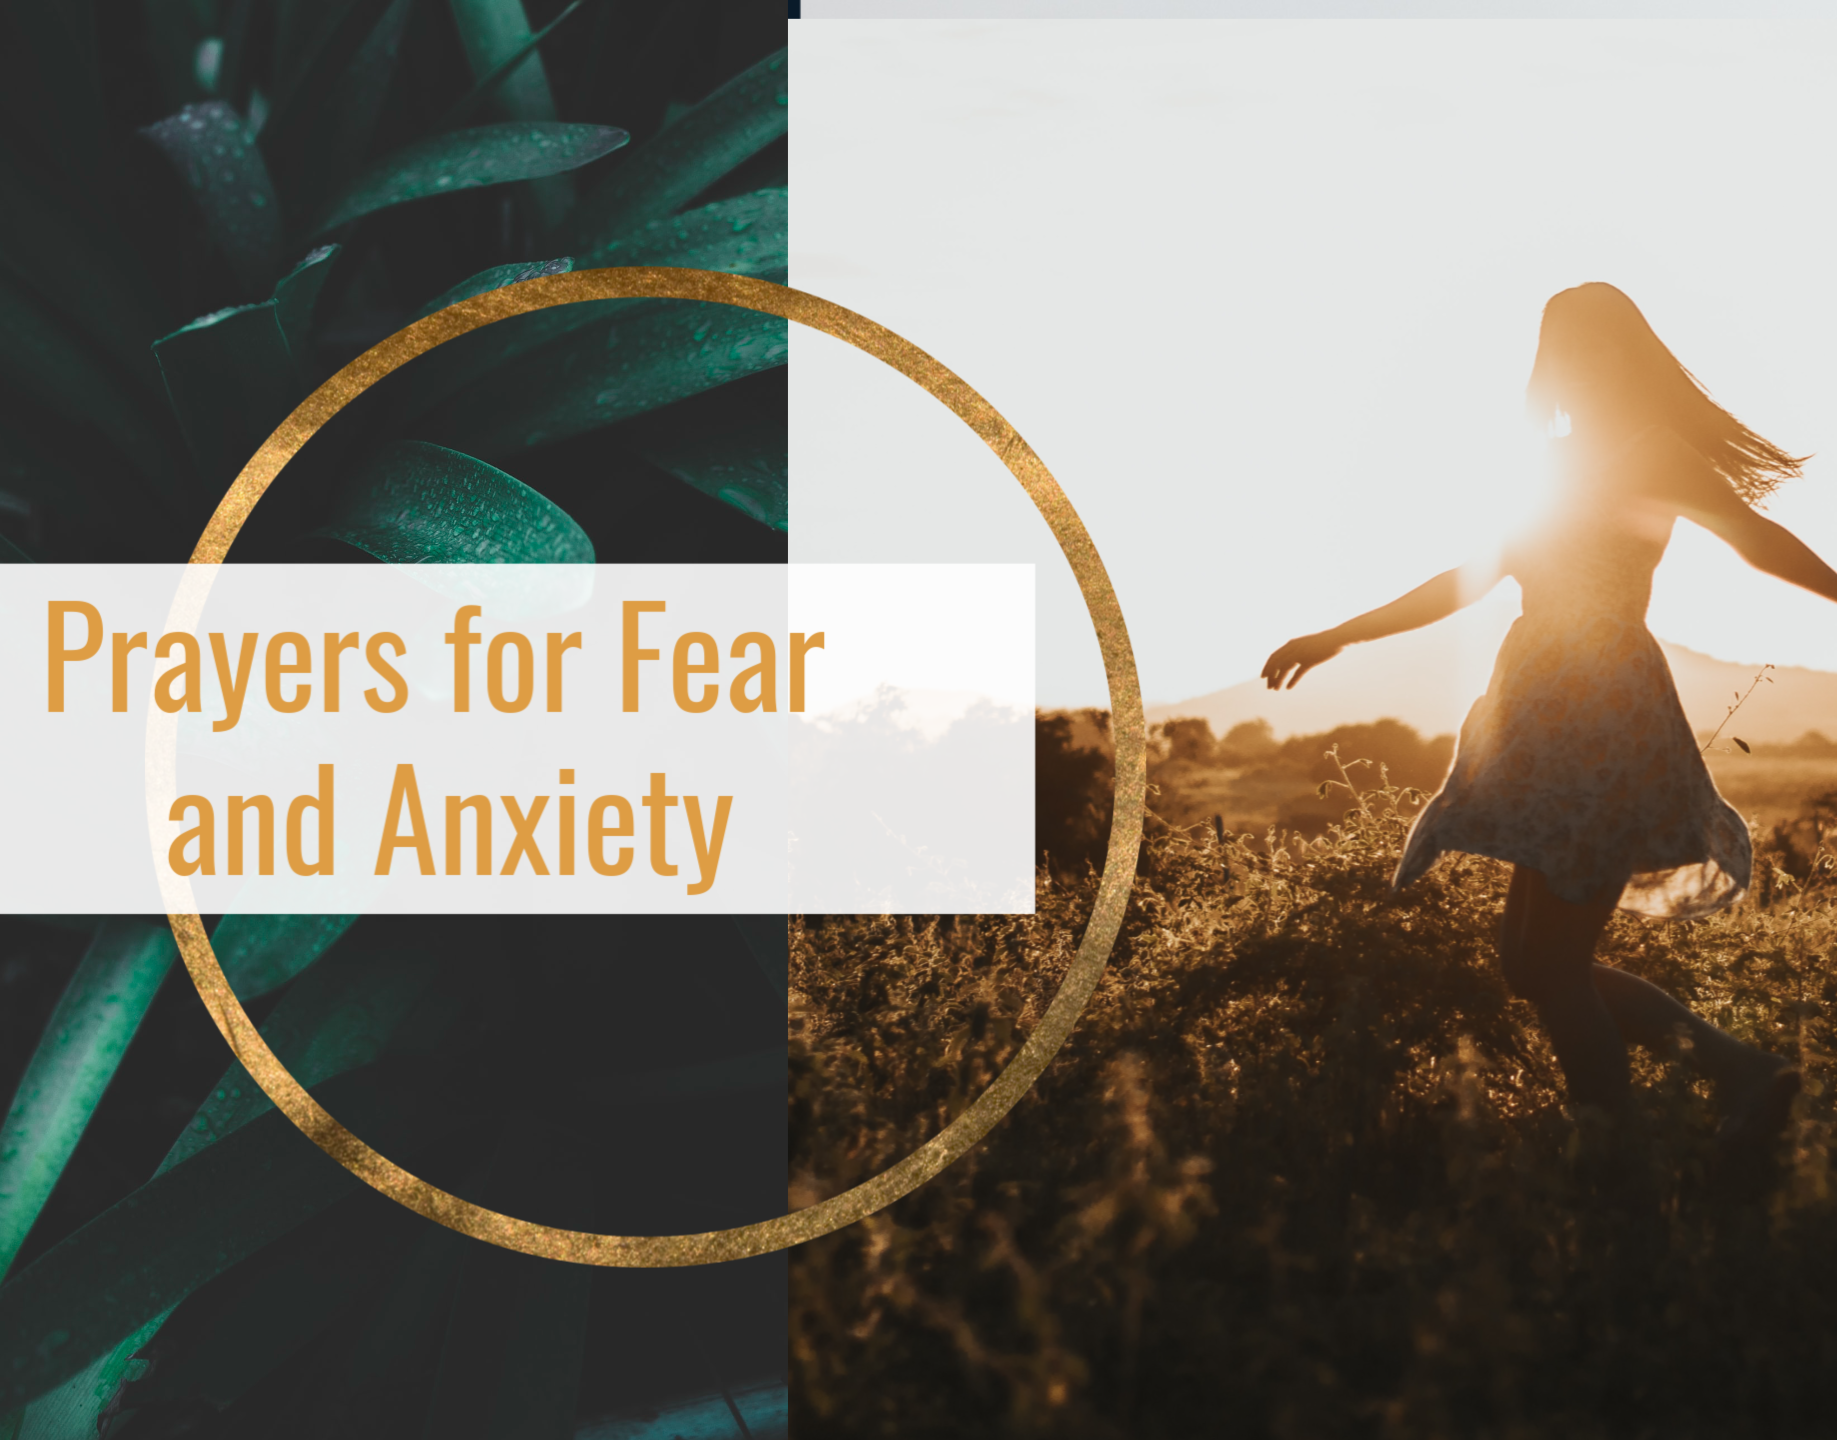 Prayers for Fear and Anxiety Featured Image #prayersforfearandanxiety #howtopray #christianprayers #spiritualwarfare #prayerwarriors #prayersforpeace